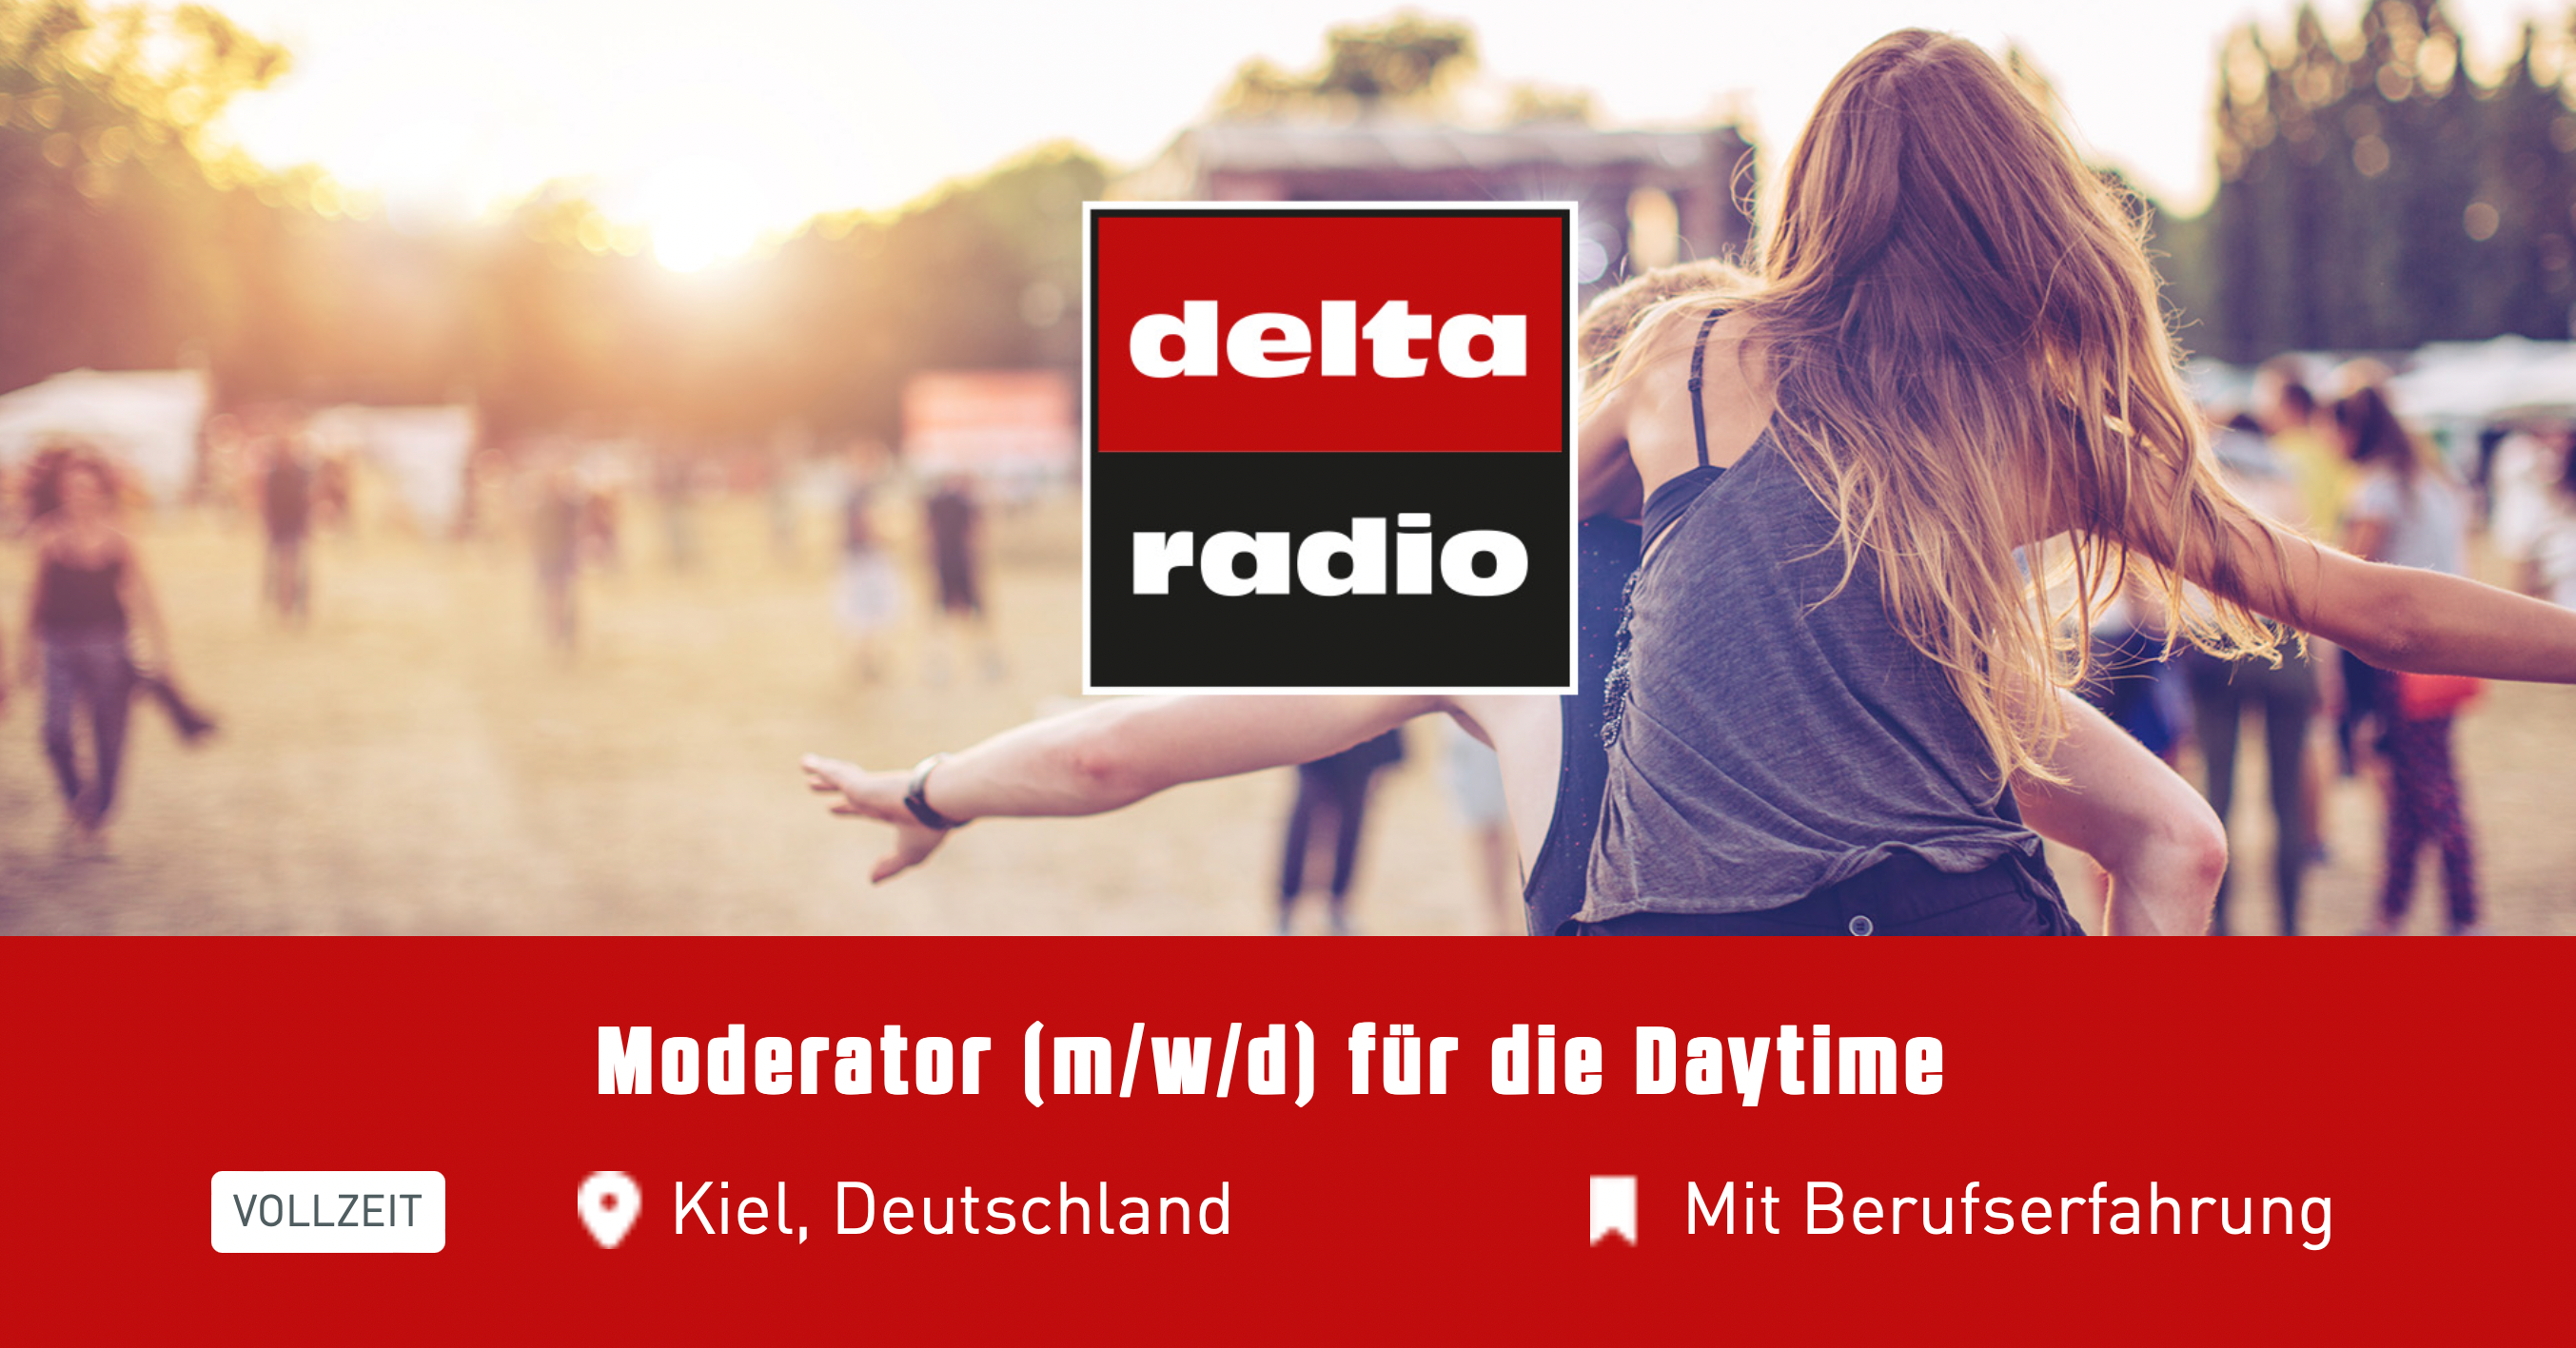 delta radio moderator daytime kopf